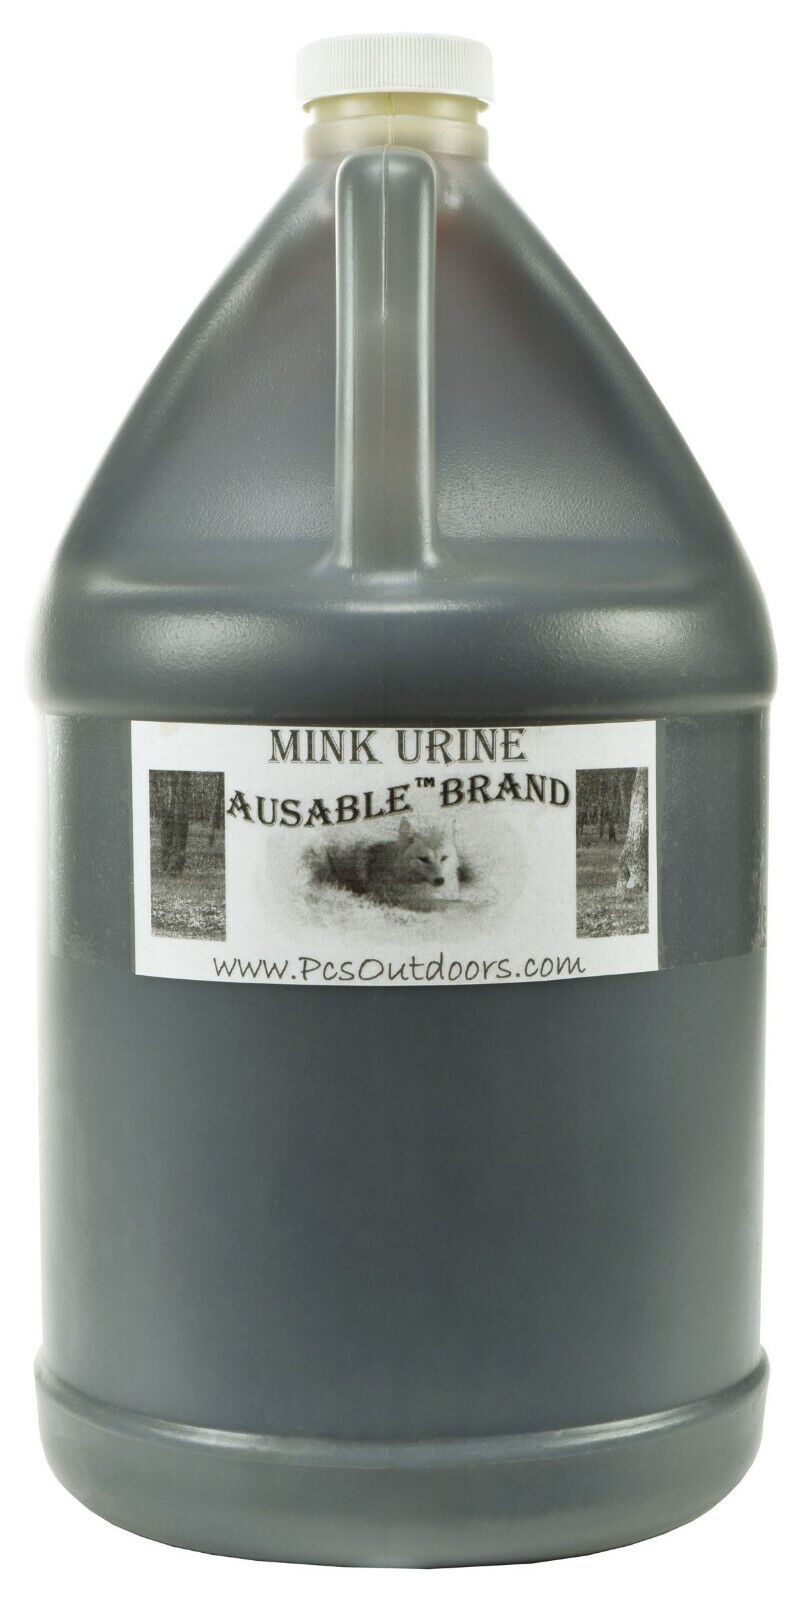 Ausable Brand Mink Urine 1 Gallon of Pure Mink Urine Plastic Bottle 